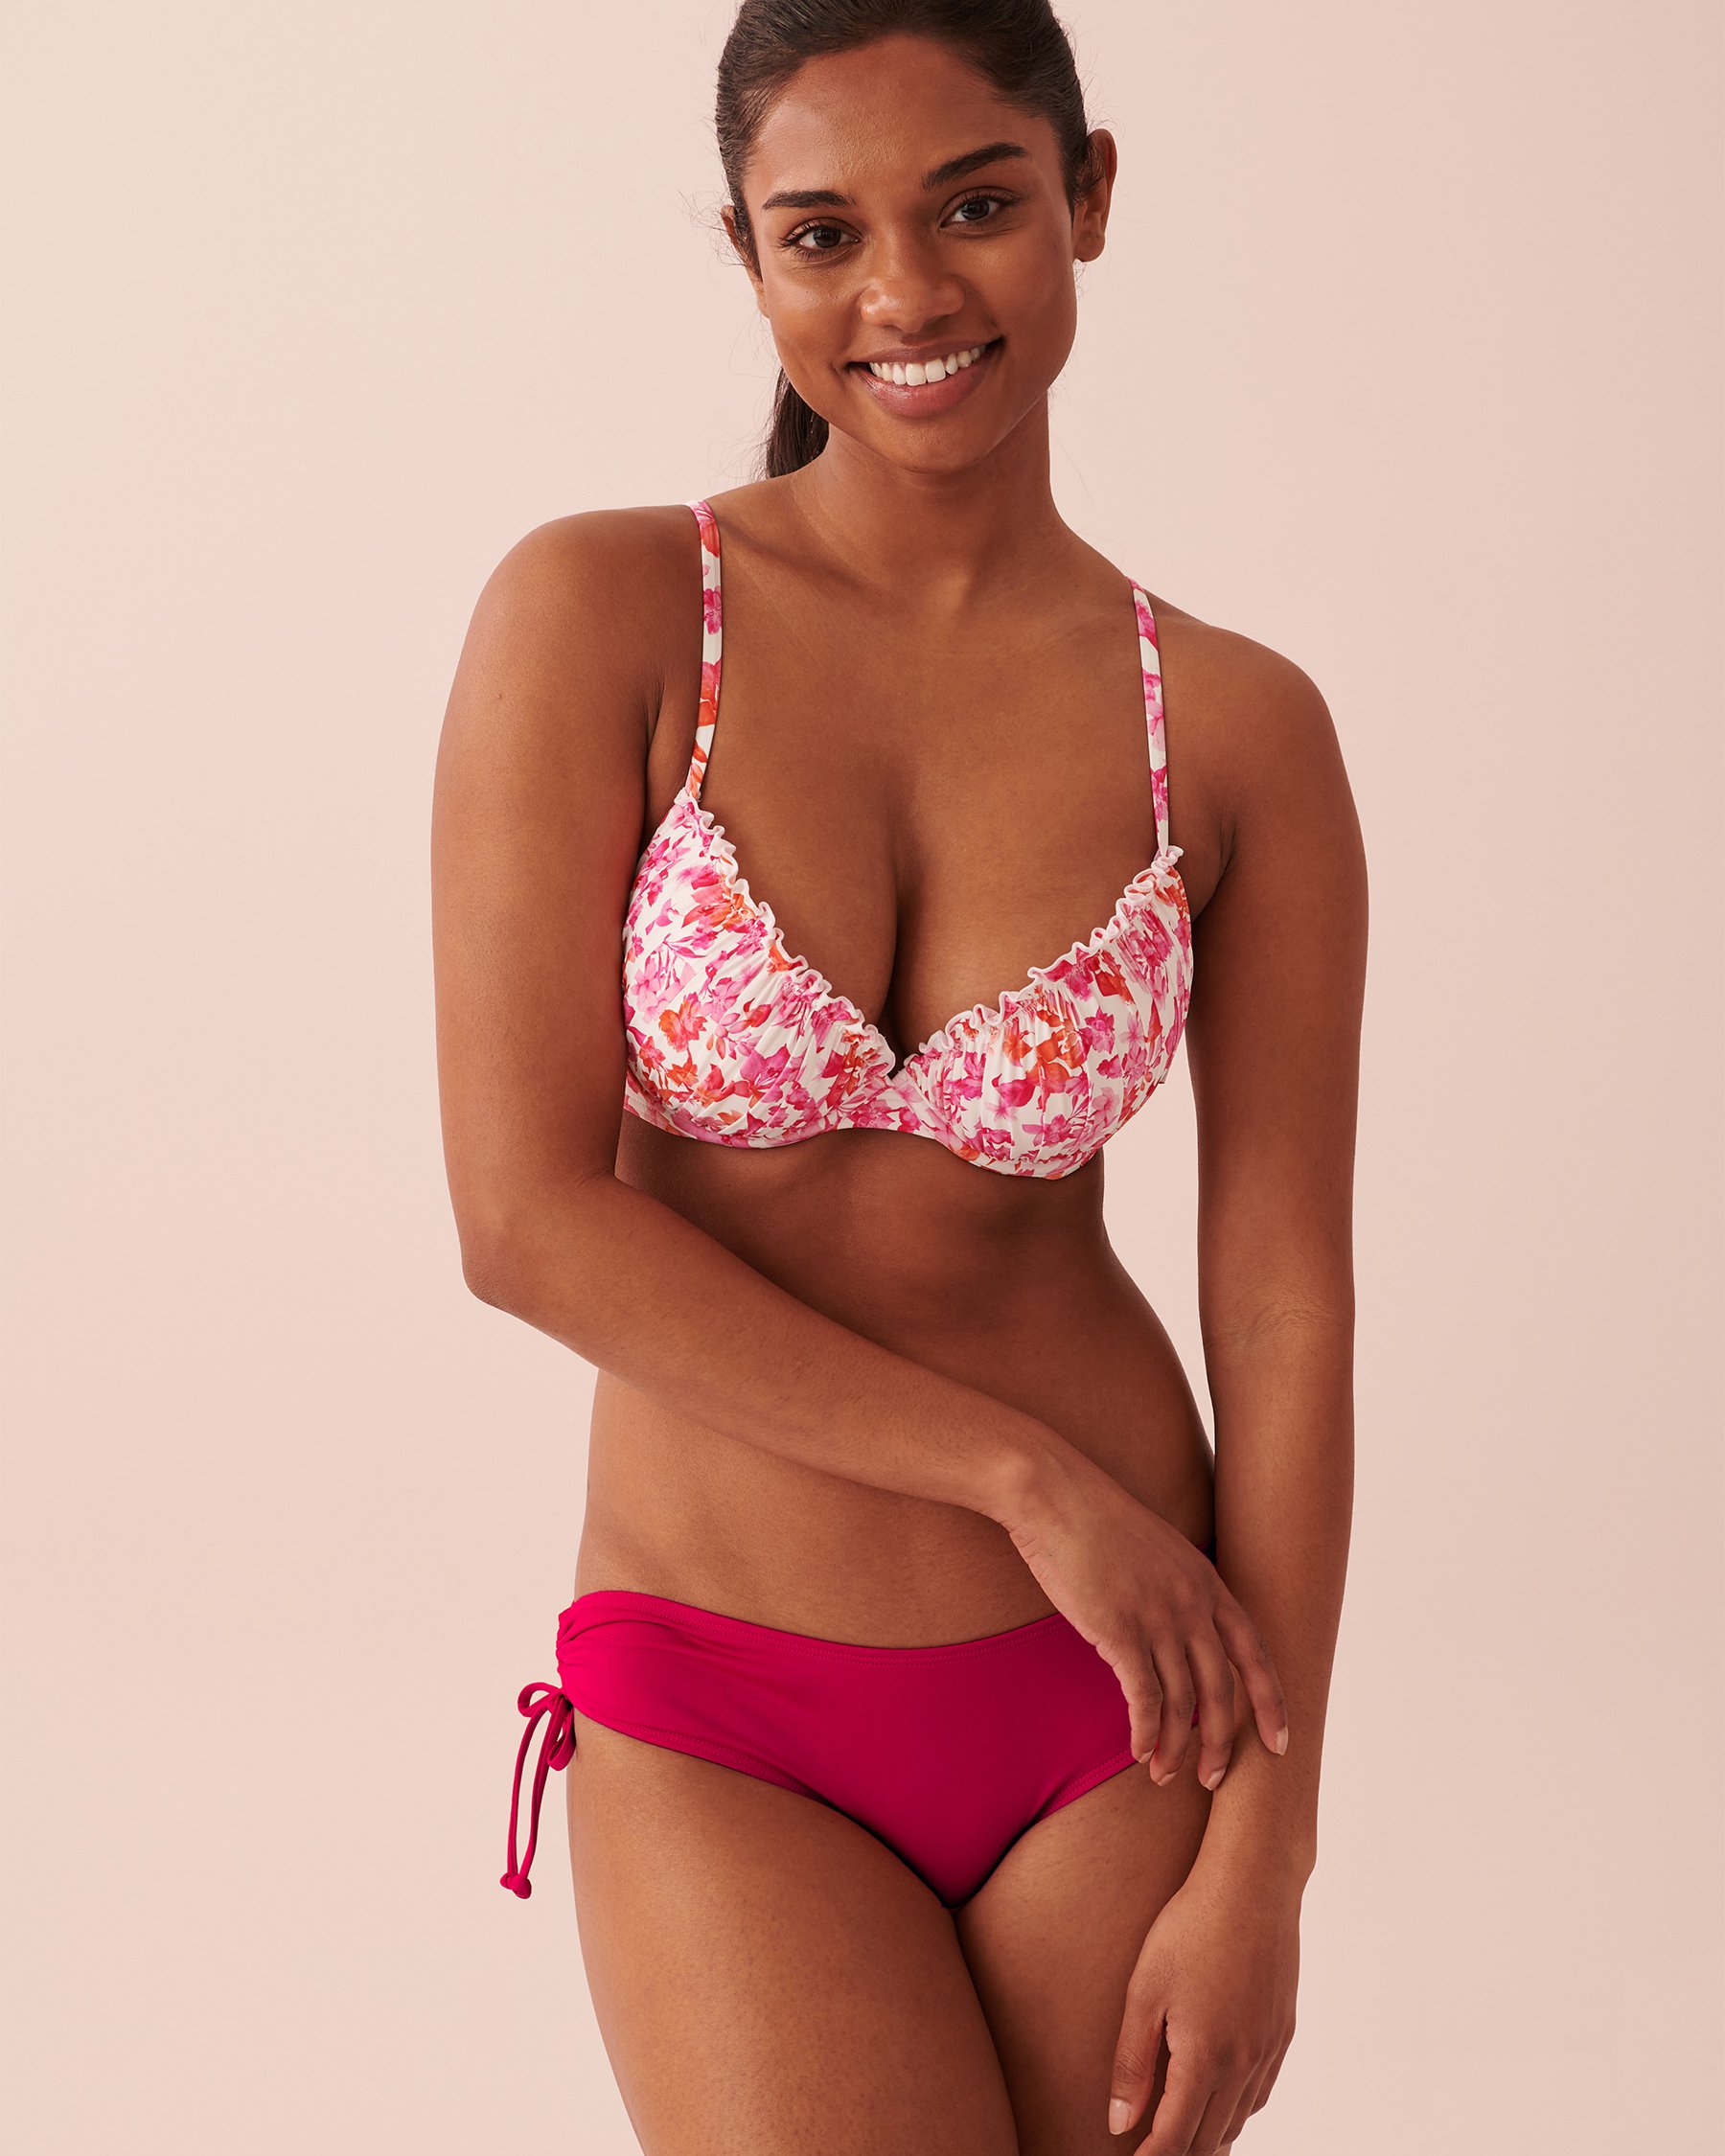 LA VIE EN ROSE AQUA BRIGHT ROSE Recycled Fibers Brazilian Bikini Bottom Bright pink 70300446 - View7